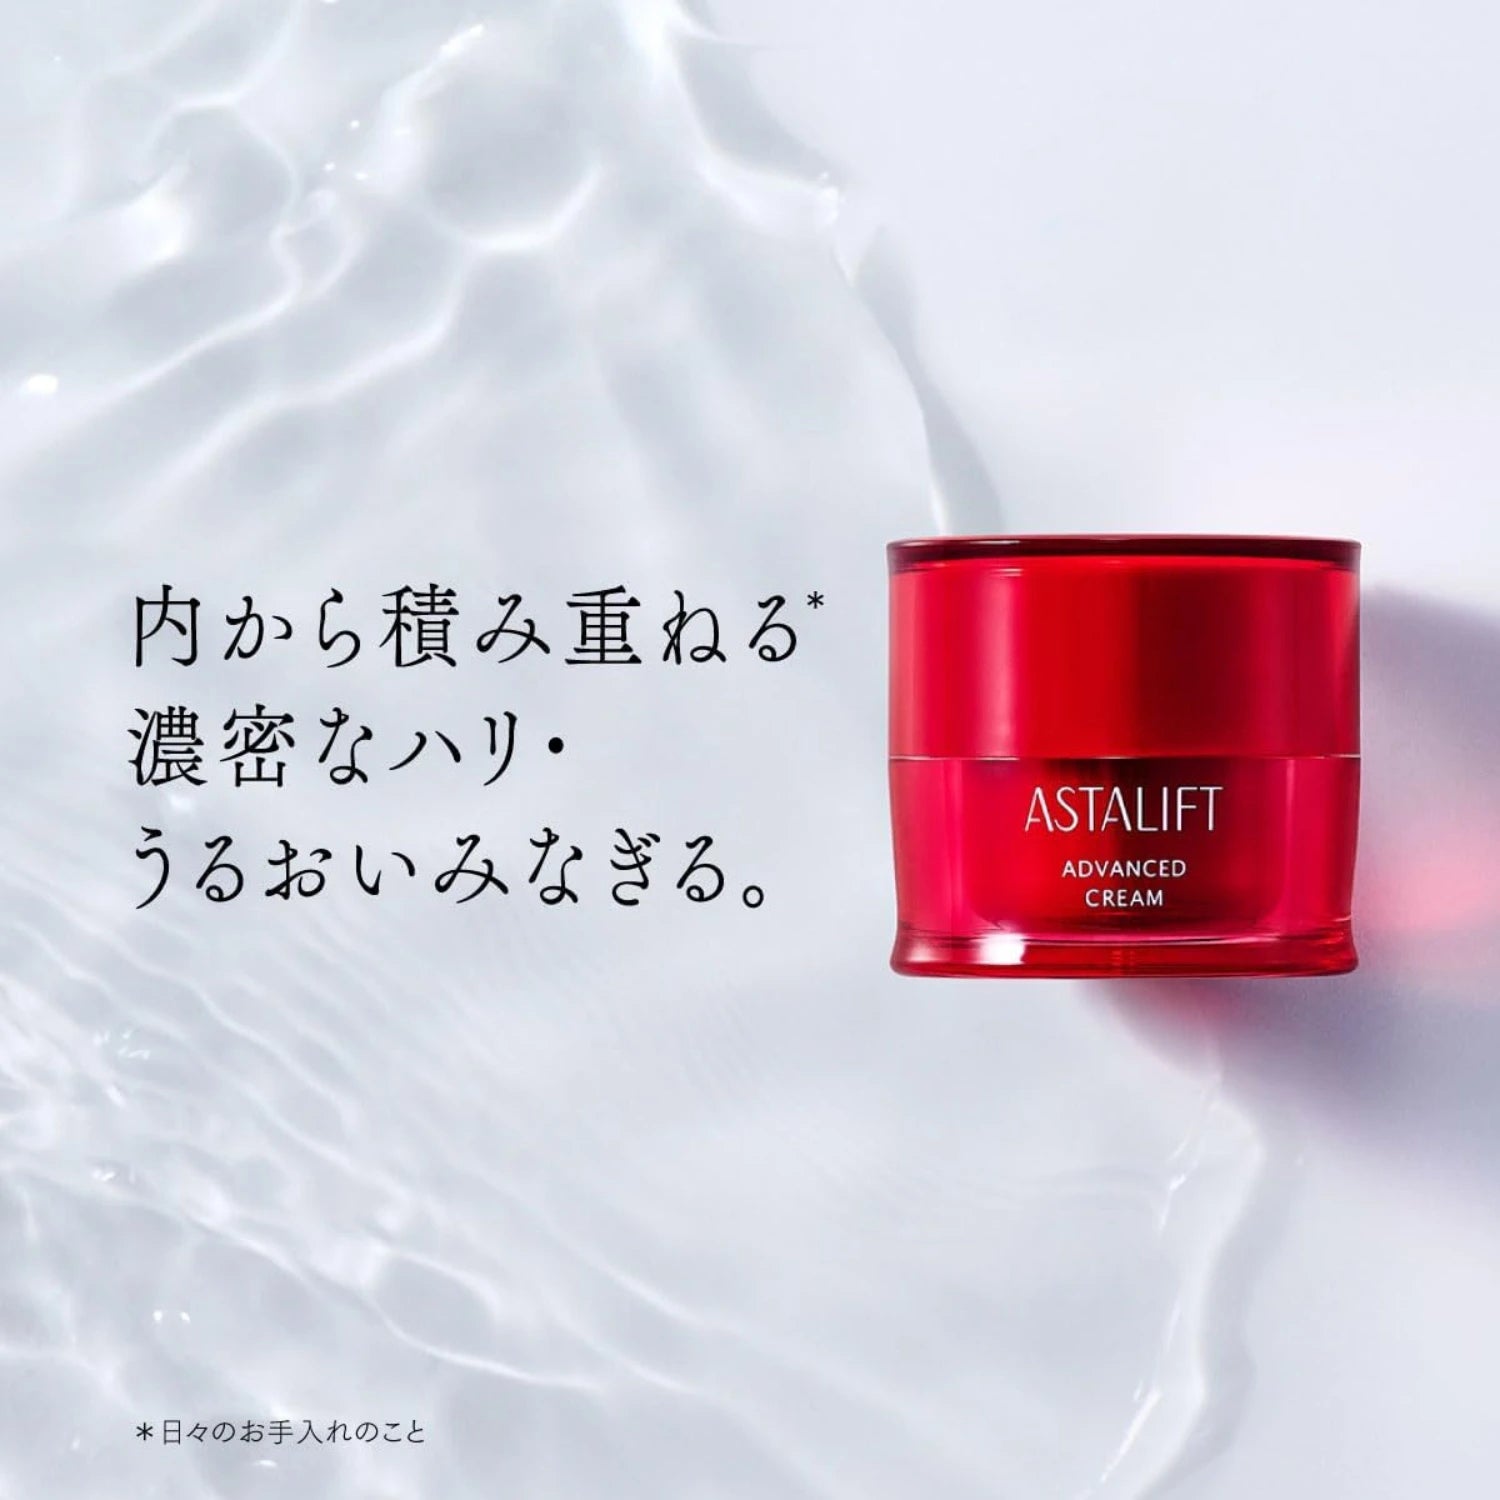 Astalift Advanced Cream 30g - Buy Me Japan